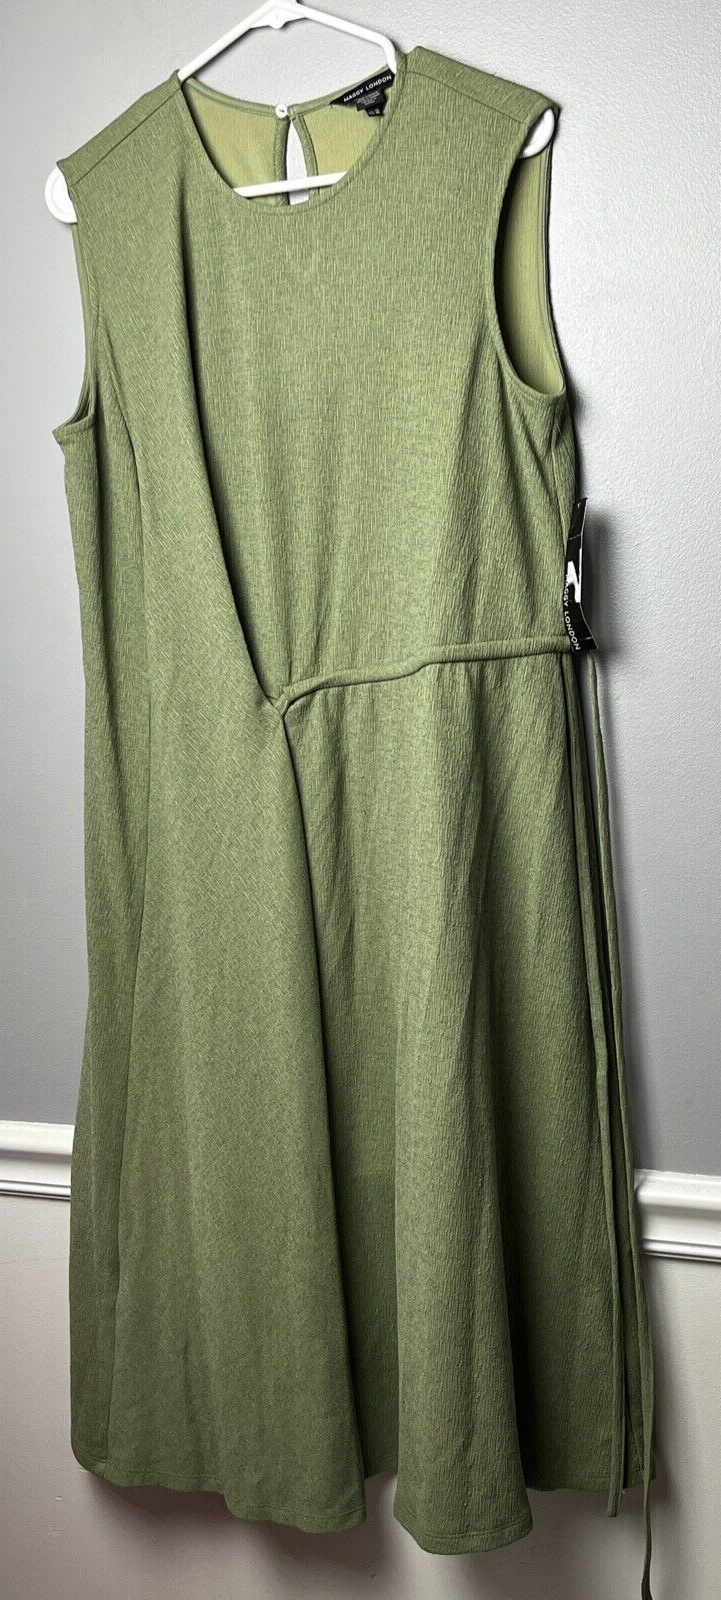 MAGGY LONDON Draped Sleeveless Dress In Pesto GREEN SIZE 10 NEW